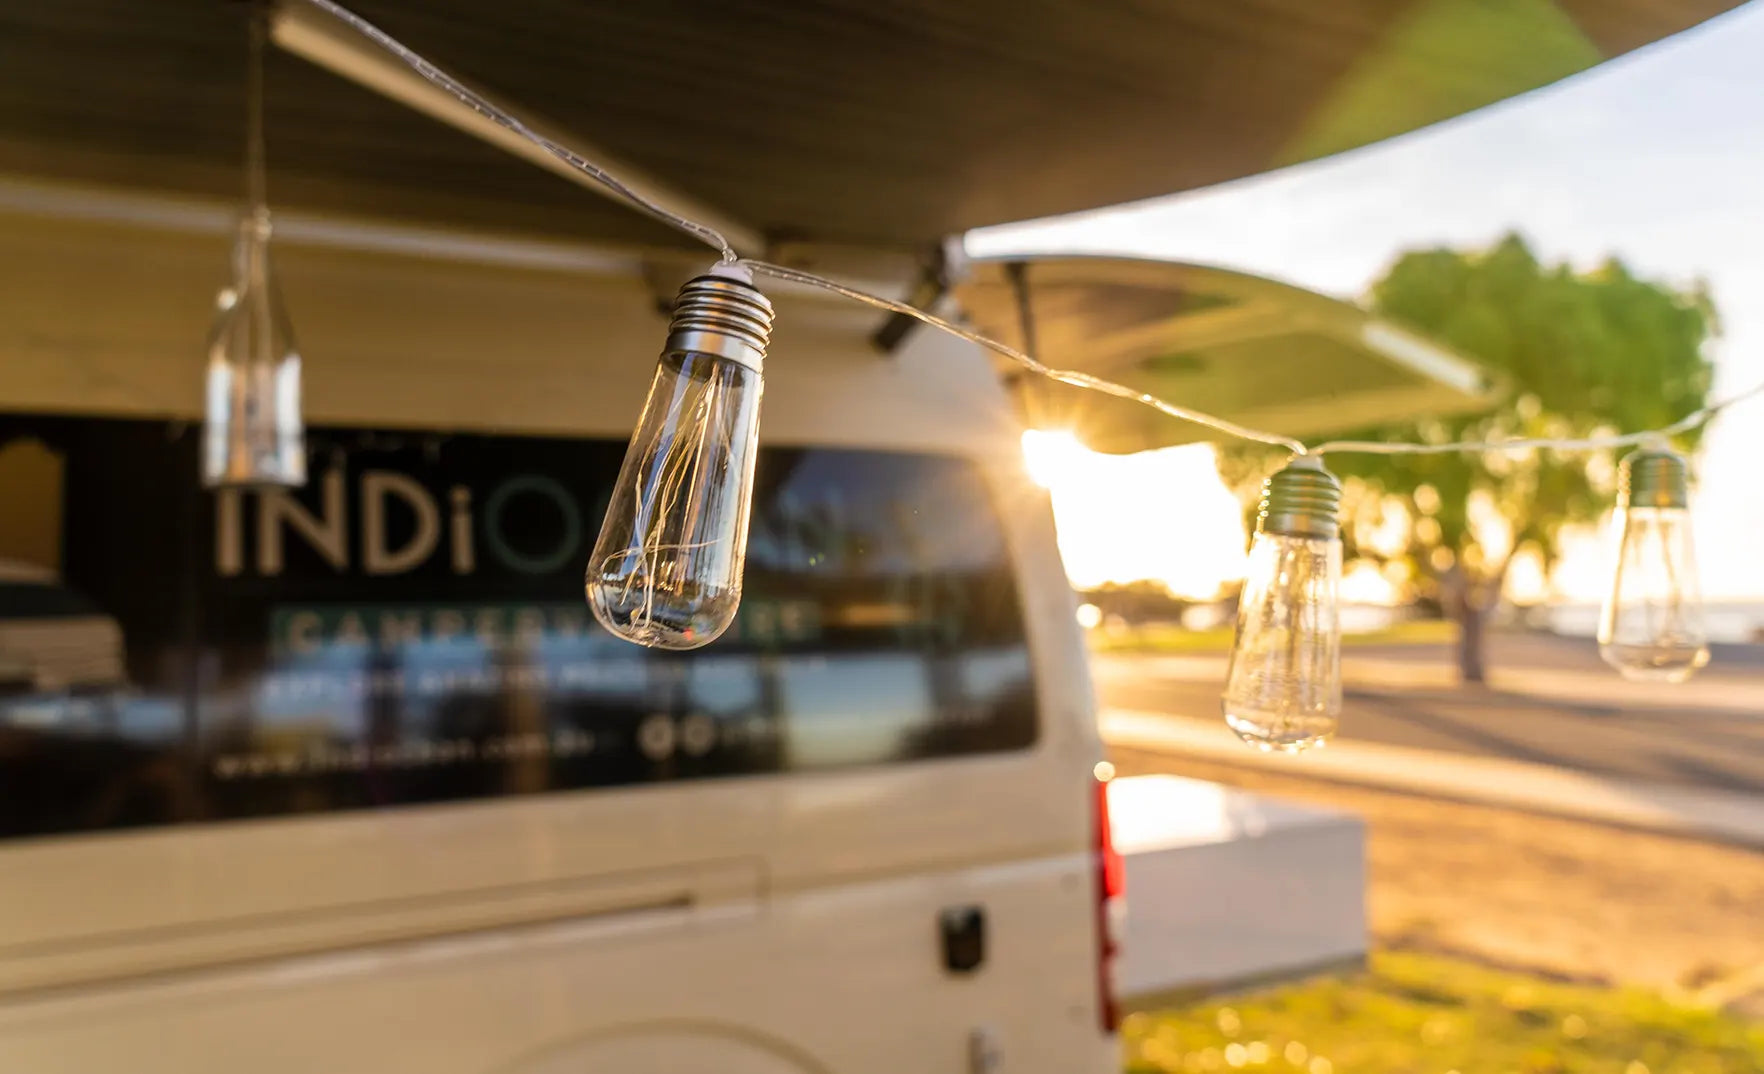 Install solar panel on your van